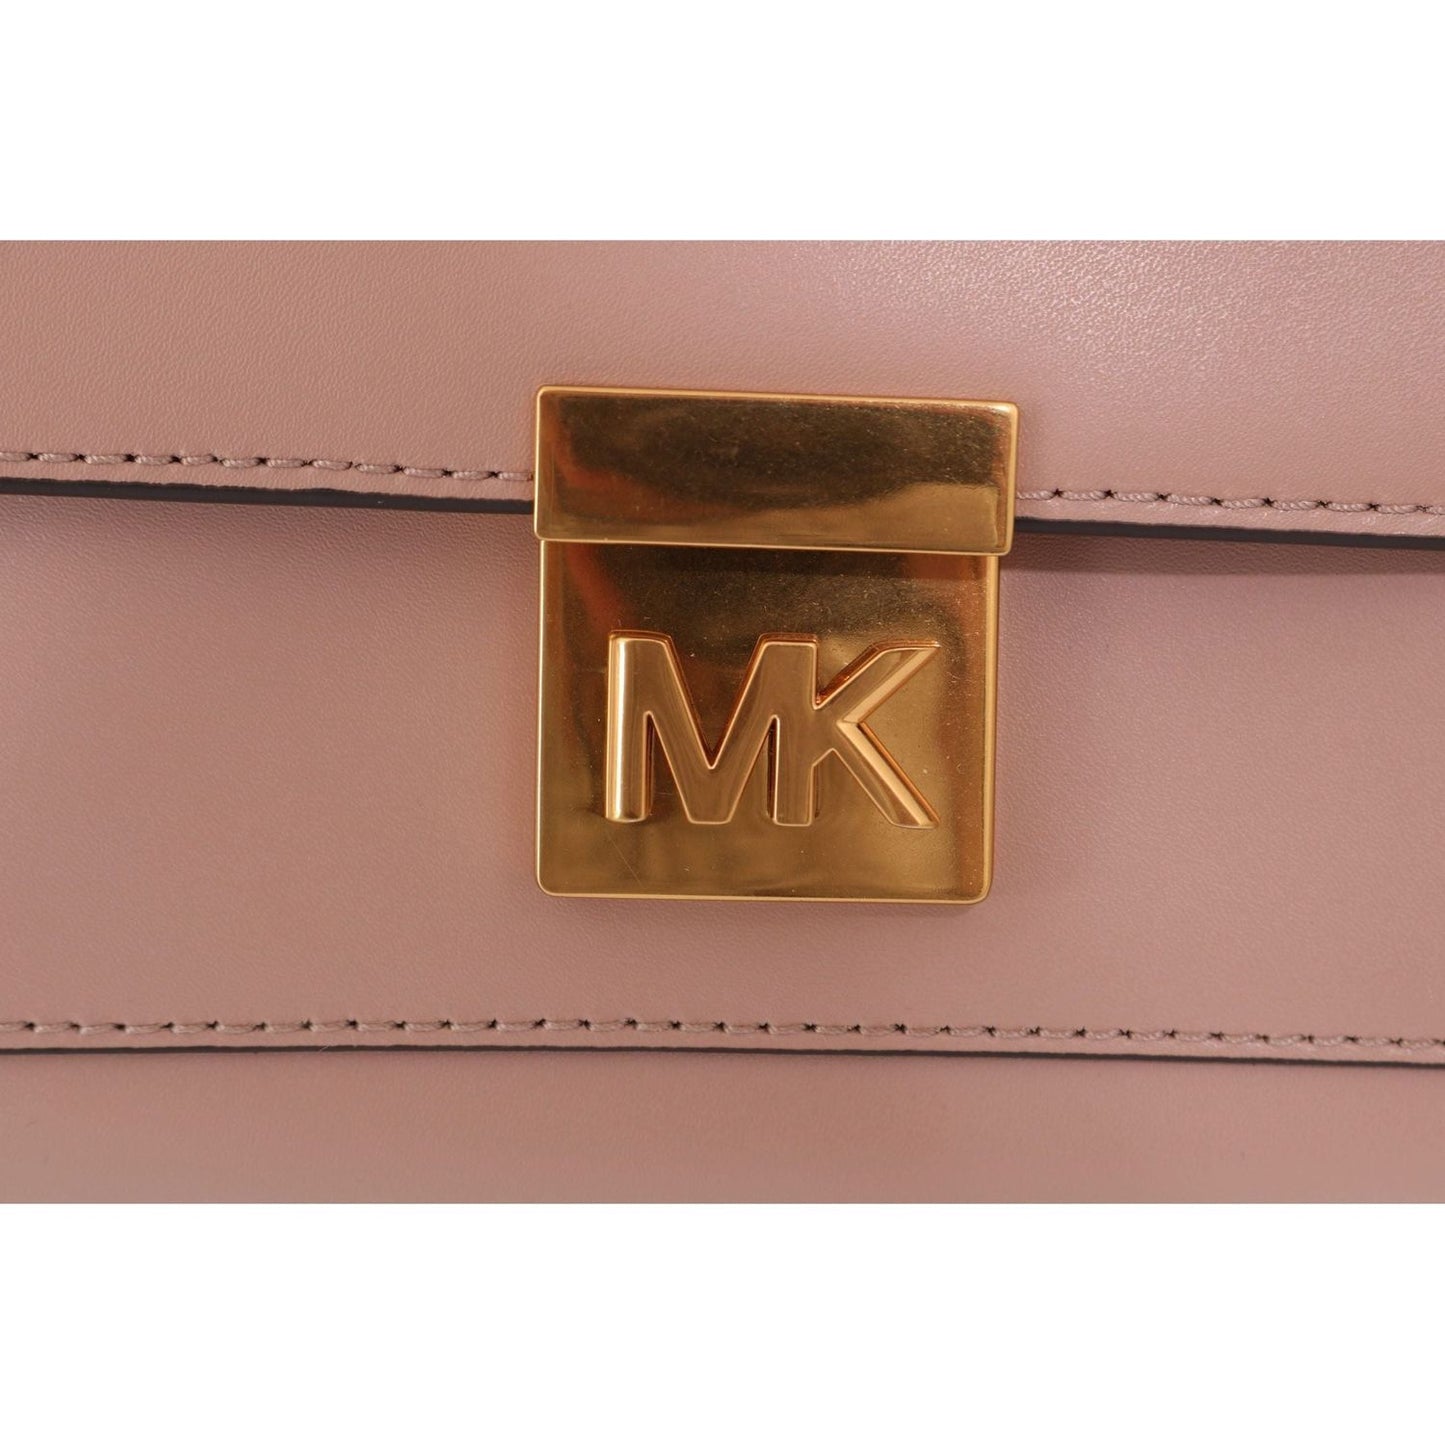 Michael Kors Elegant Pink Leather Mindy Shoulder Bag pink-mindy-leather-shoulder-bag WOMAN HANDBAG IMG_8918-1-scaled-87d2ce63-bb9.jpg